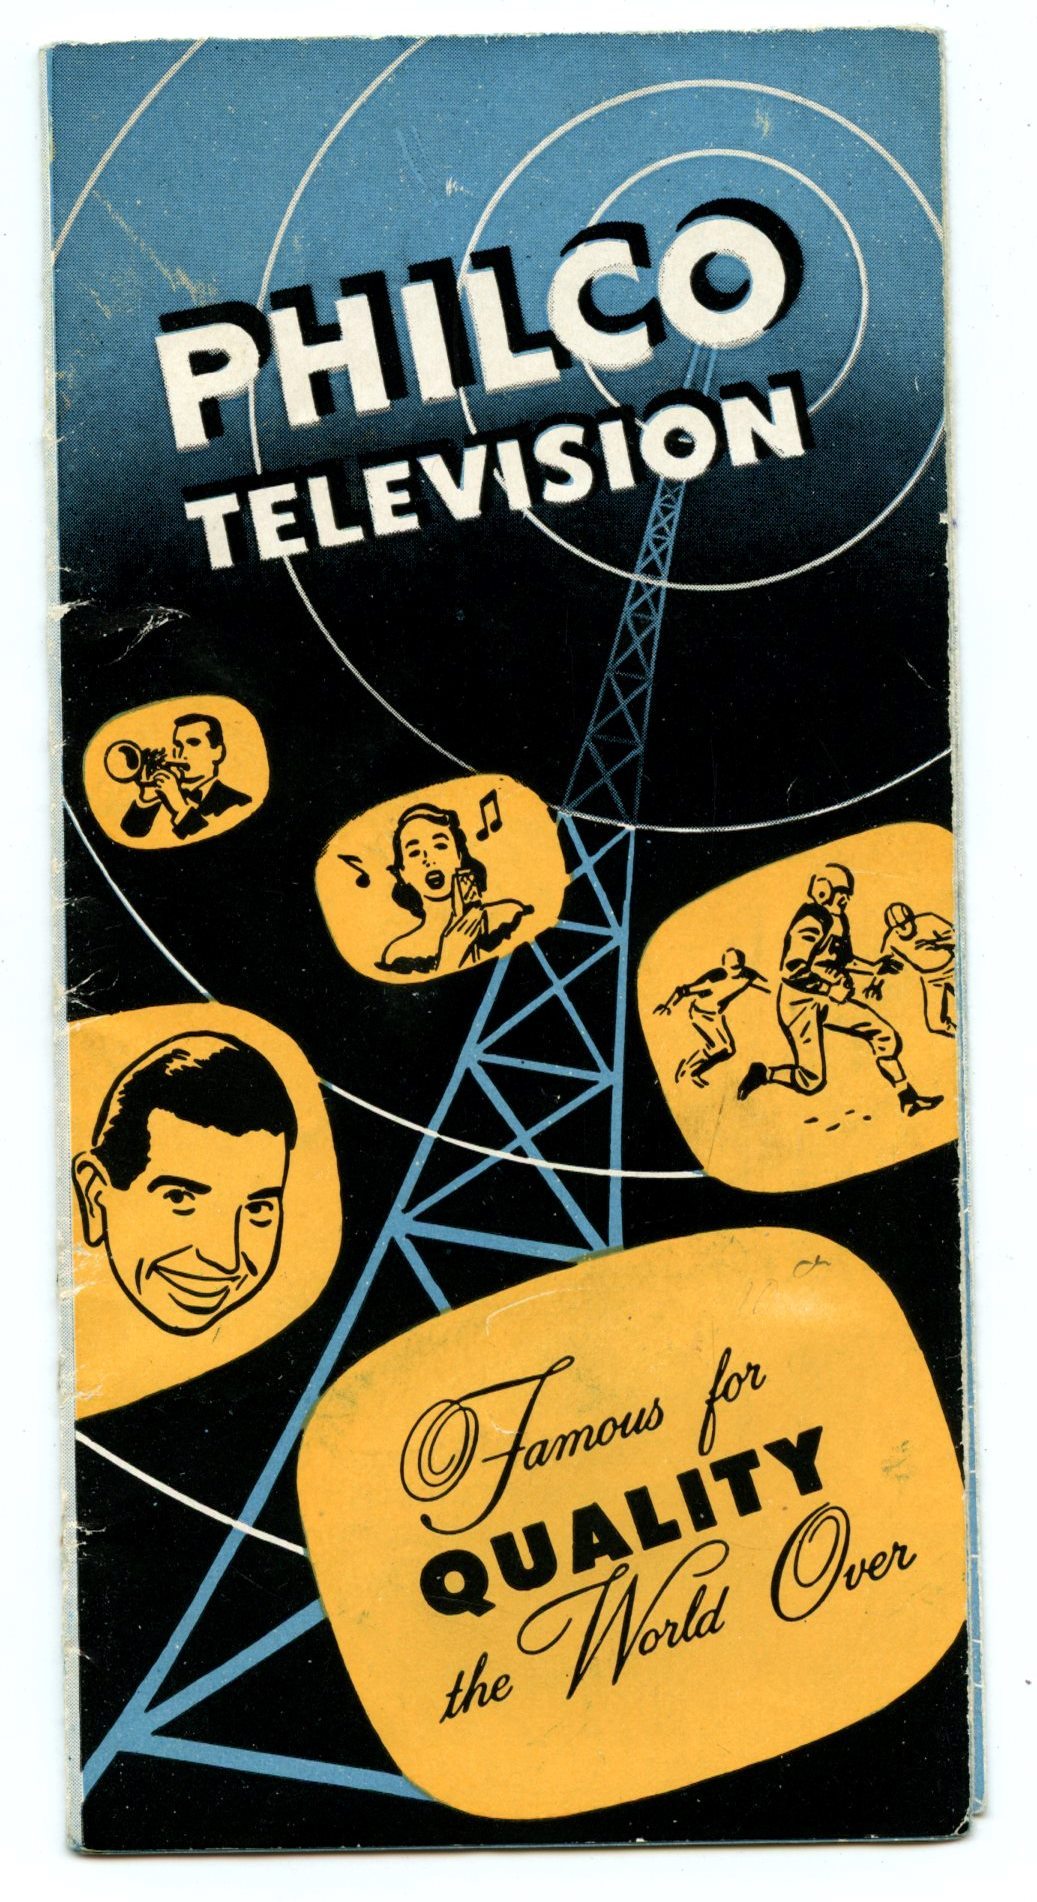 Philco Television flyer